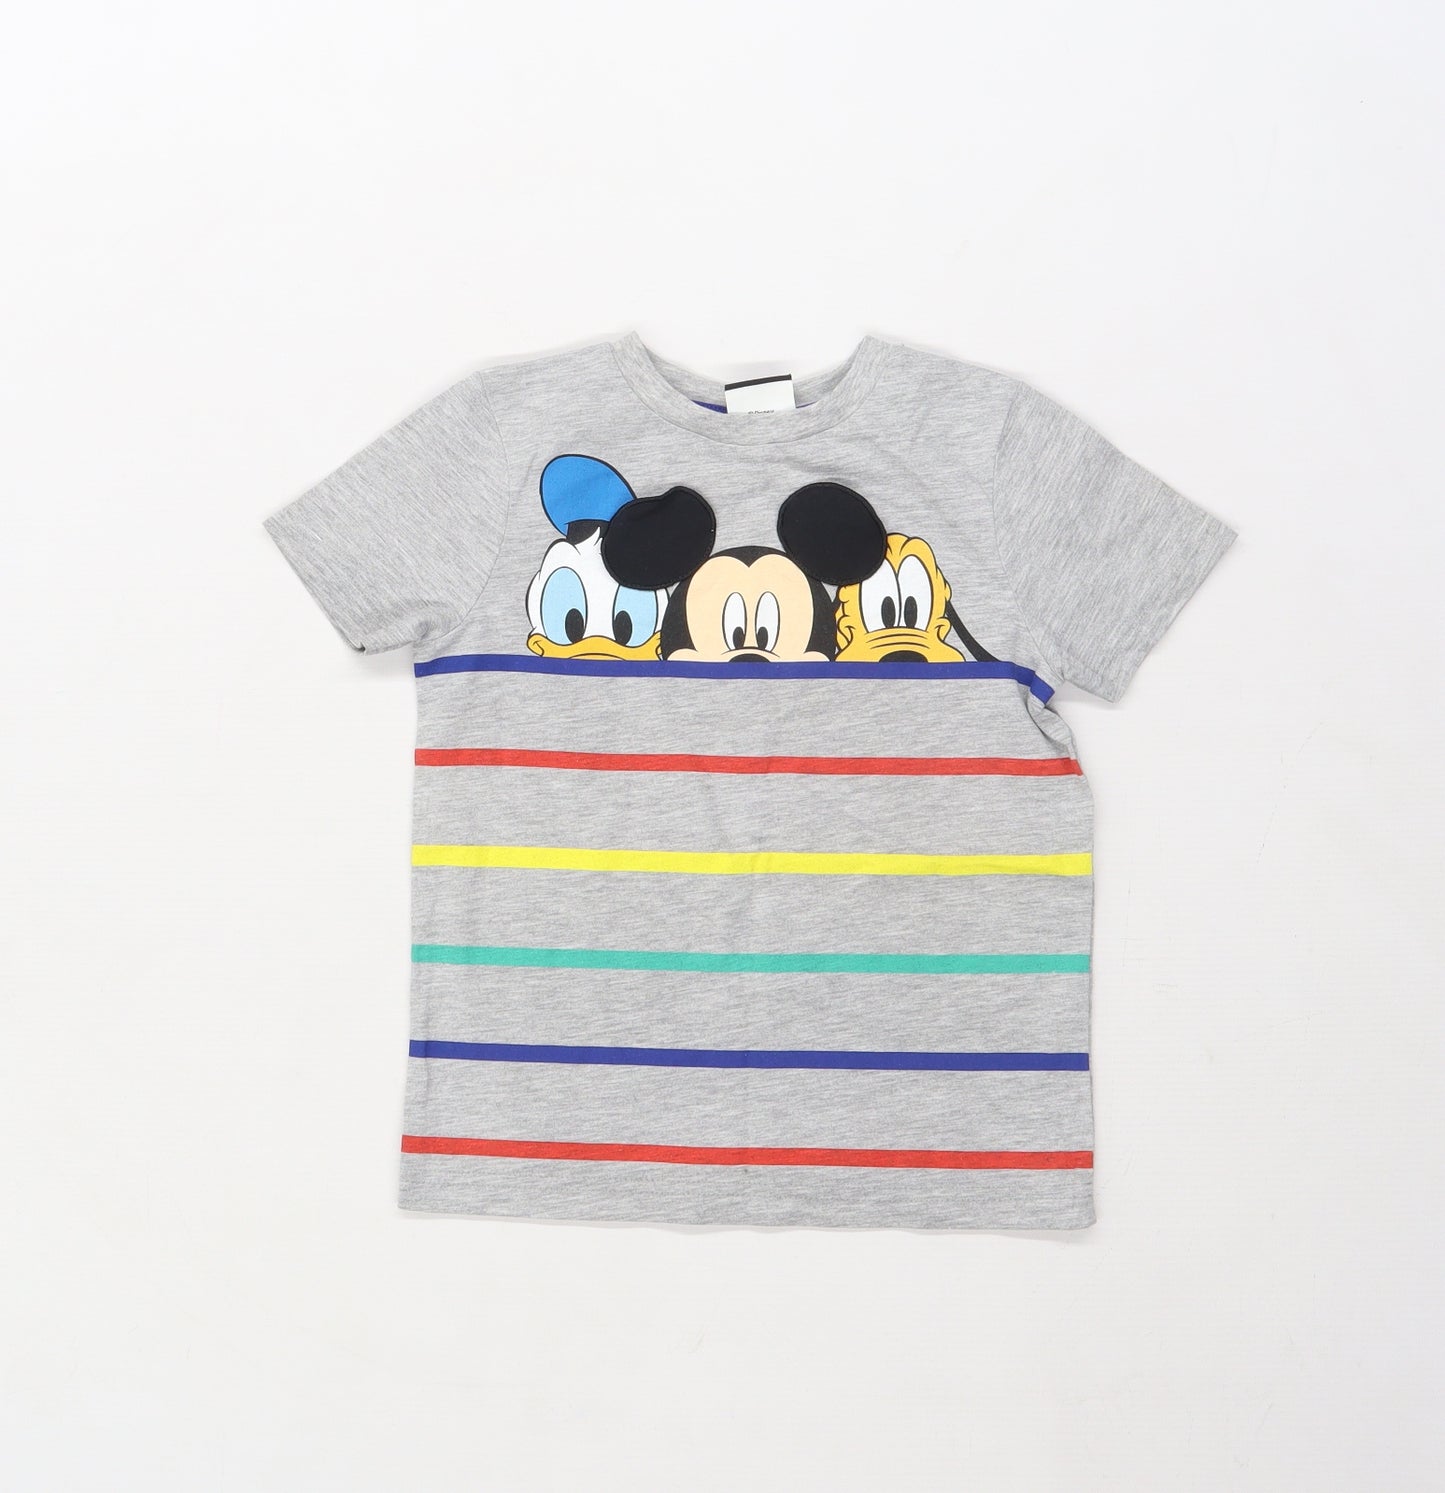 George Boys Grey  Knit Basic T-Shirt Size 3-4 Years  - disney